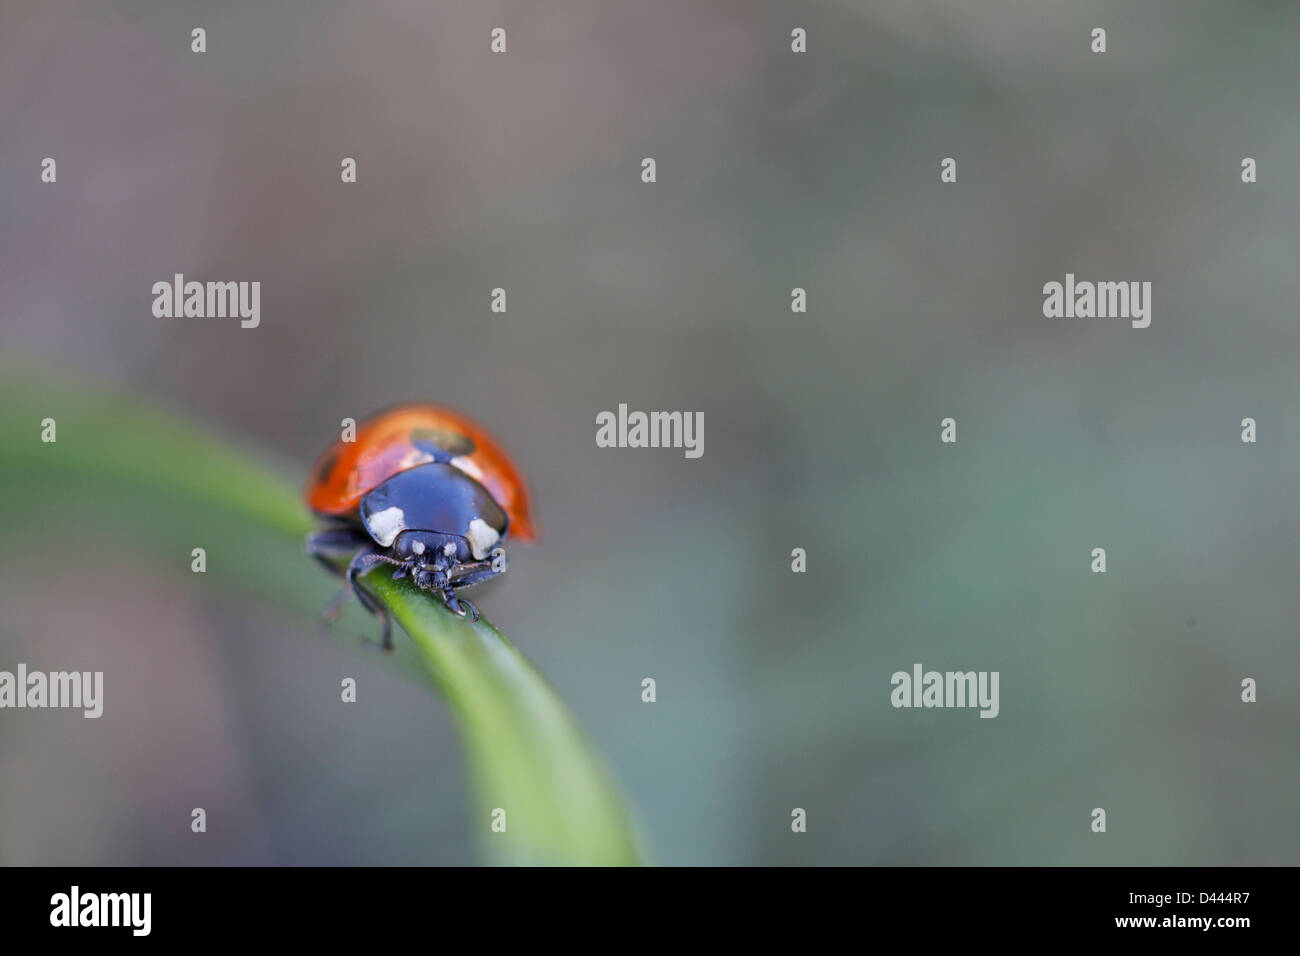 A seven dots ladybug on a grass blade. Stock Photo